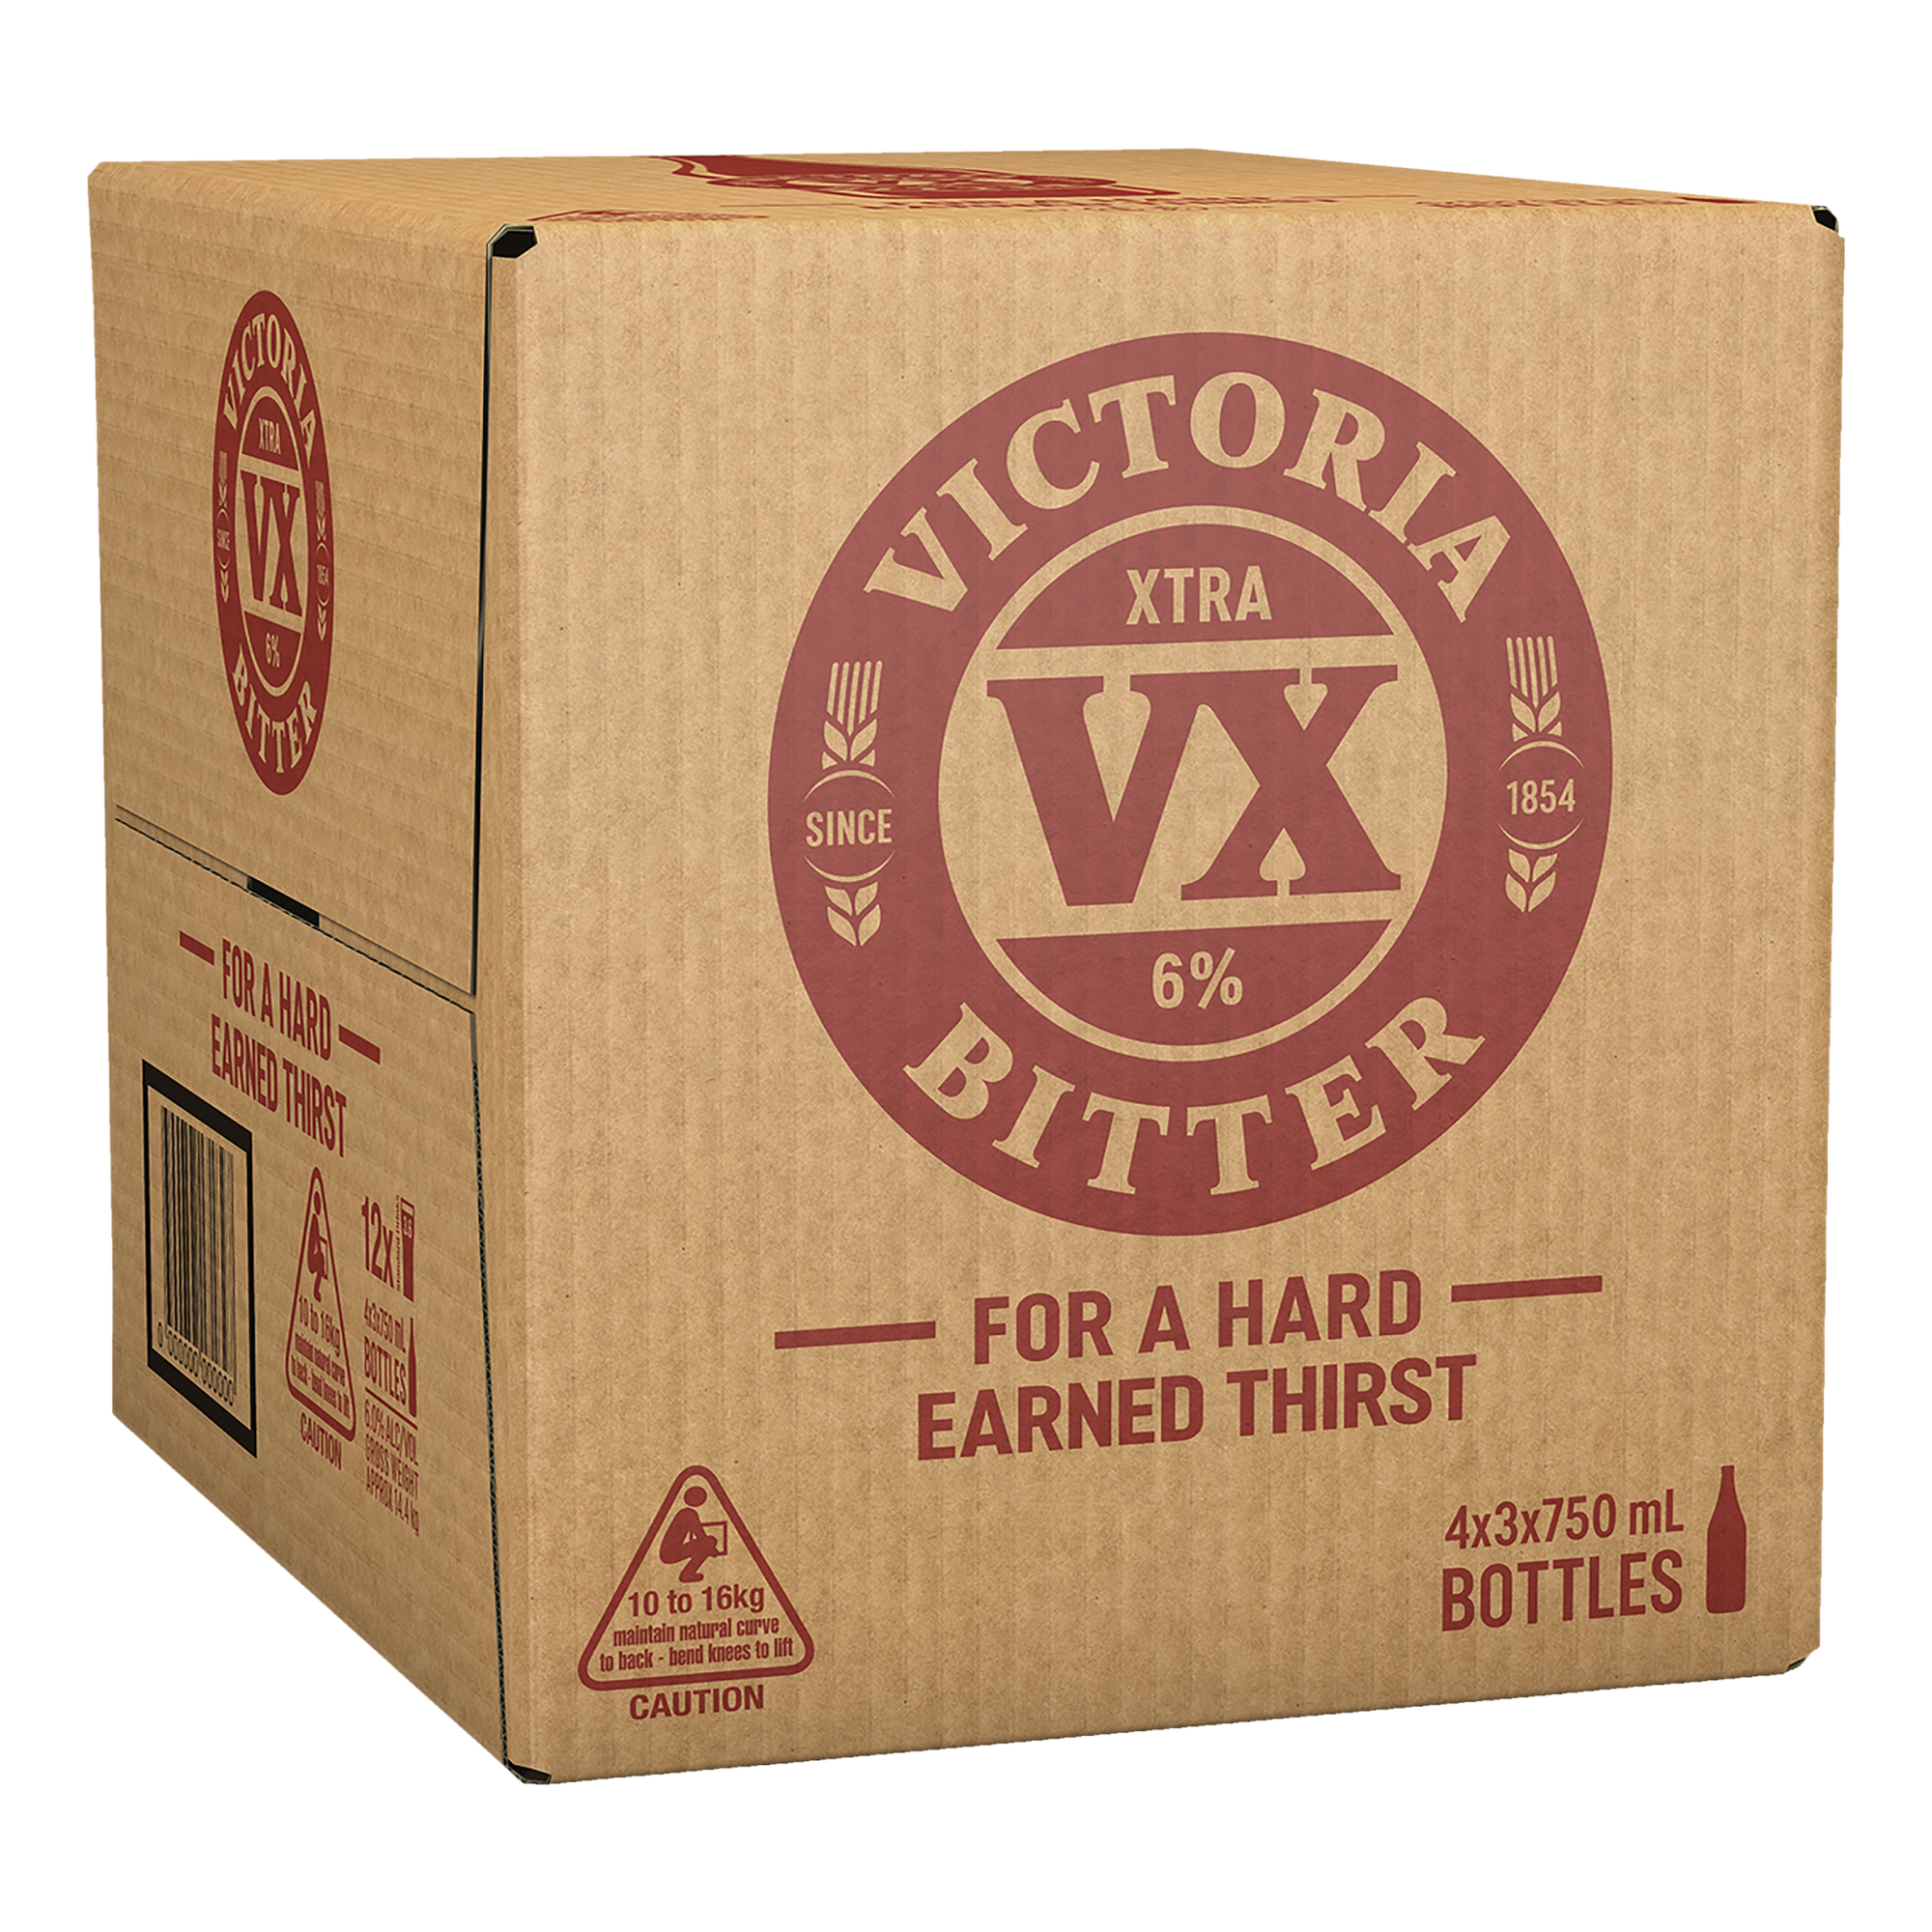 Victoria Bitter XTRA VX Lager 6% 750ml Bottle Case of 12